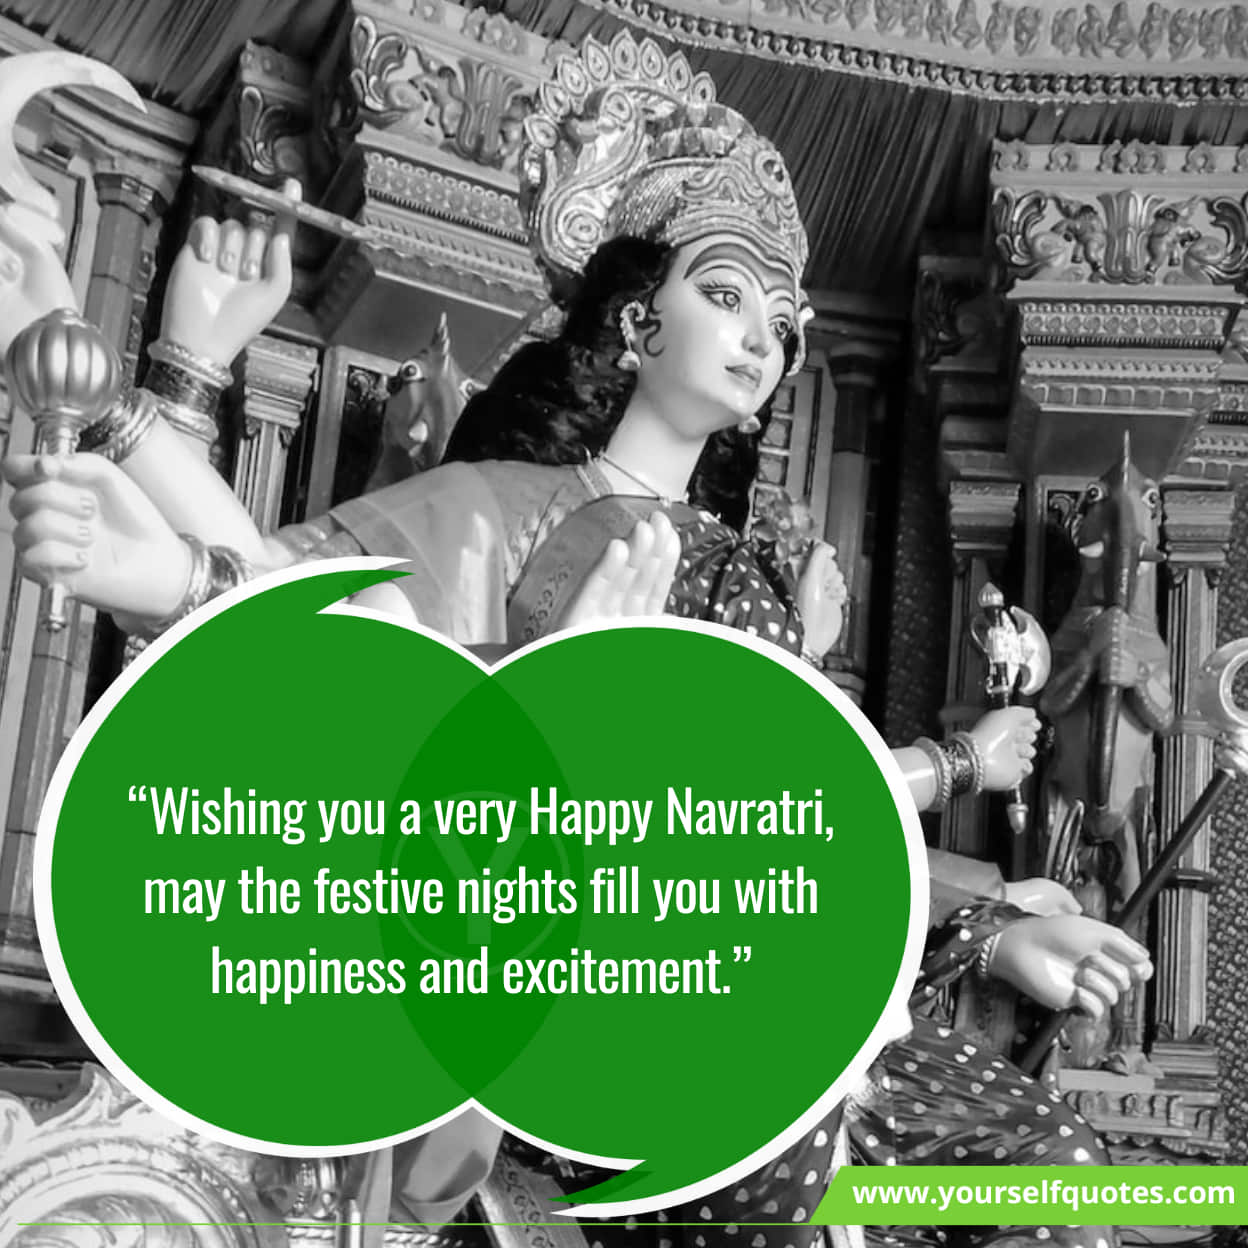 Joyful Navratri greetings and quotes